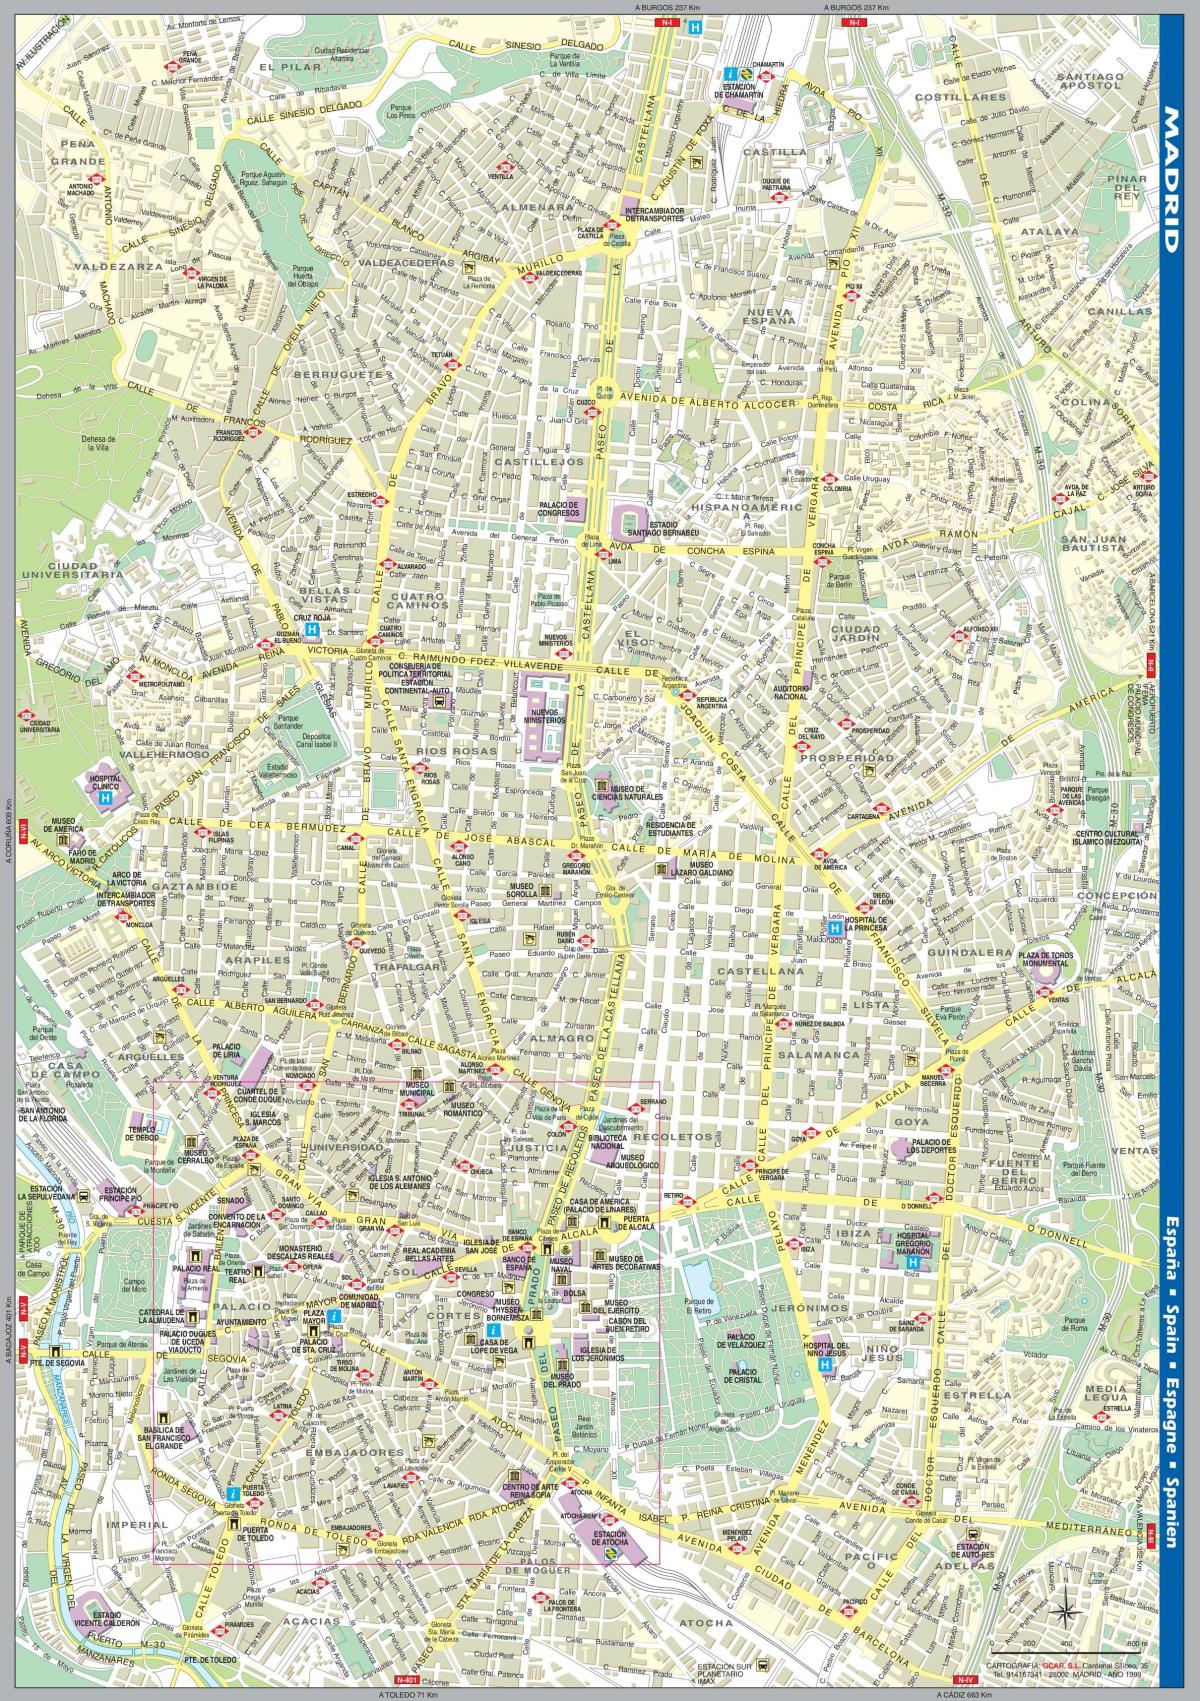 street kort over Madrid city centre